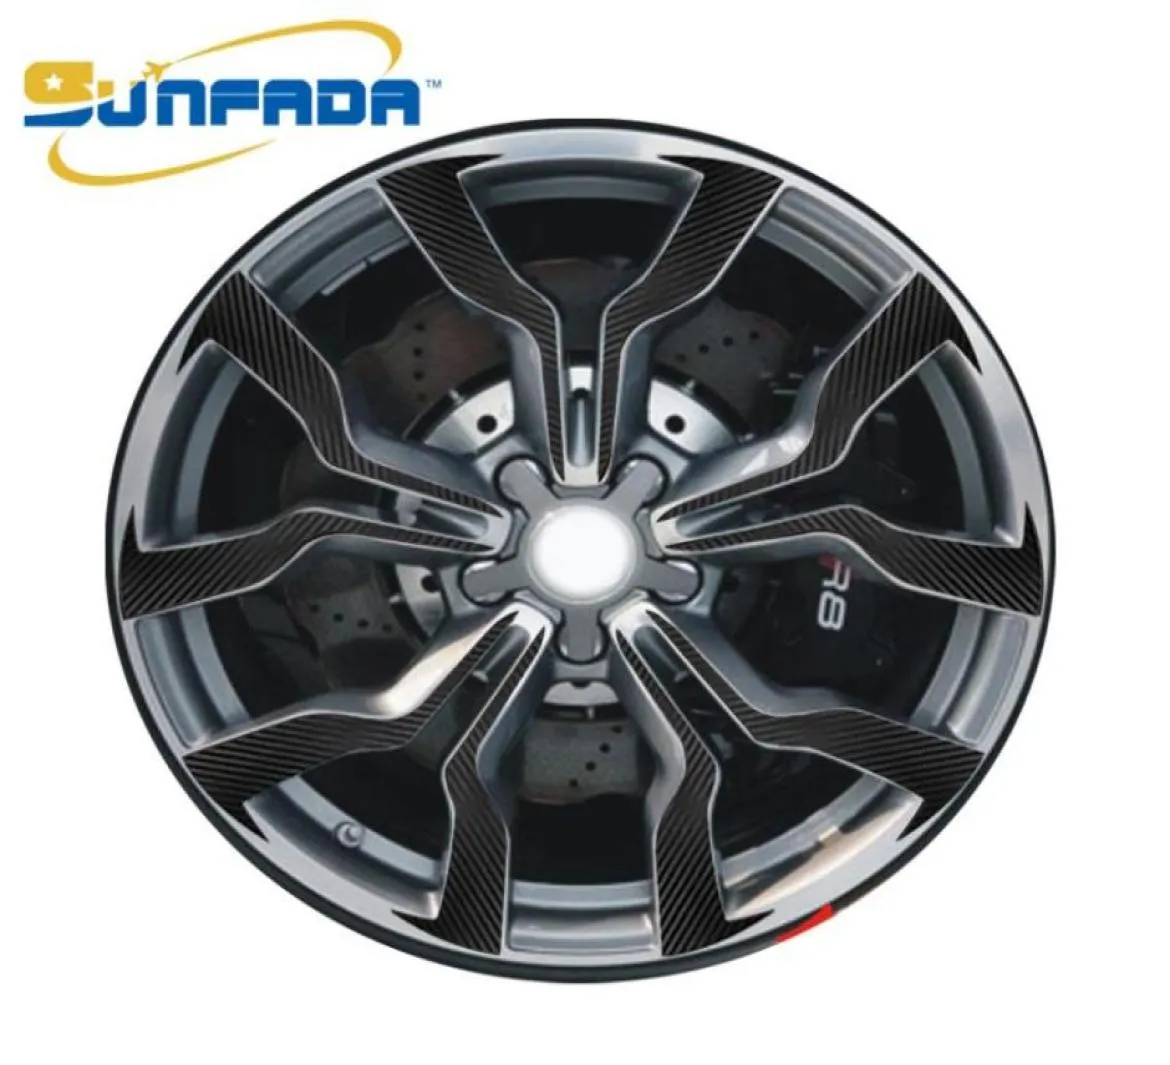 Black Wheel Hub Carbon Fiber Car Stickers For R8 External Decal Car Styling 18 inch 19 inch Wheel46956756521914